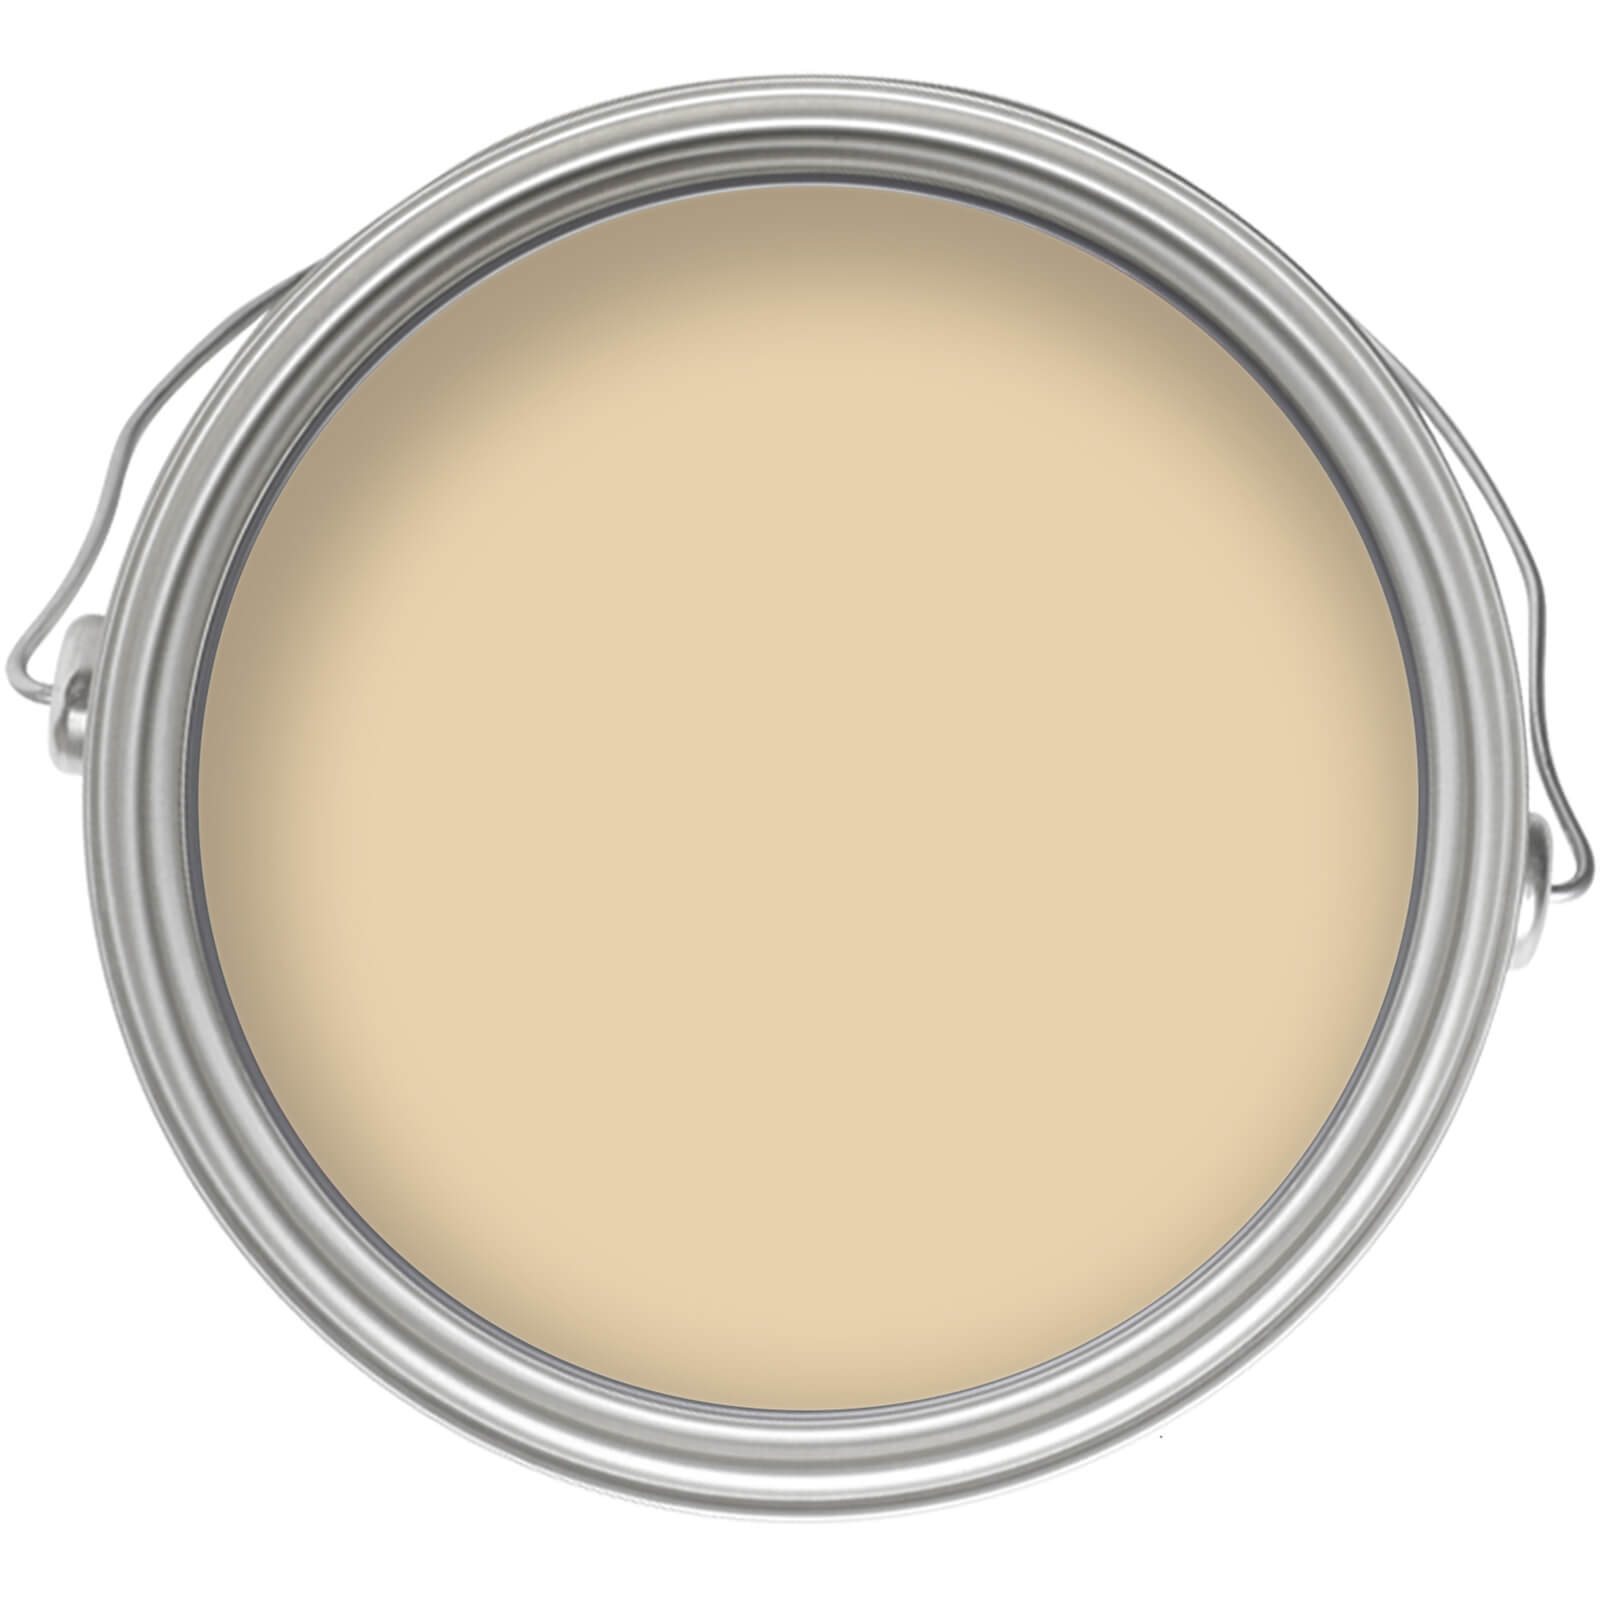 Homebase Smooth Masonry Colour Paint Tester - Regency Cream 250ml